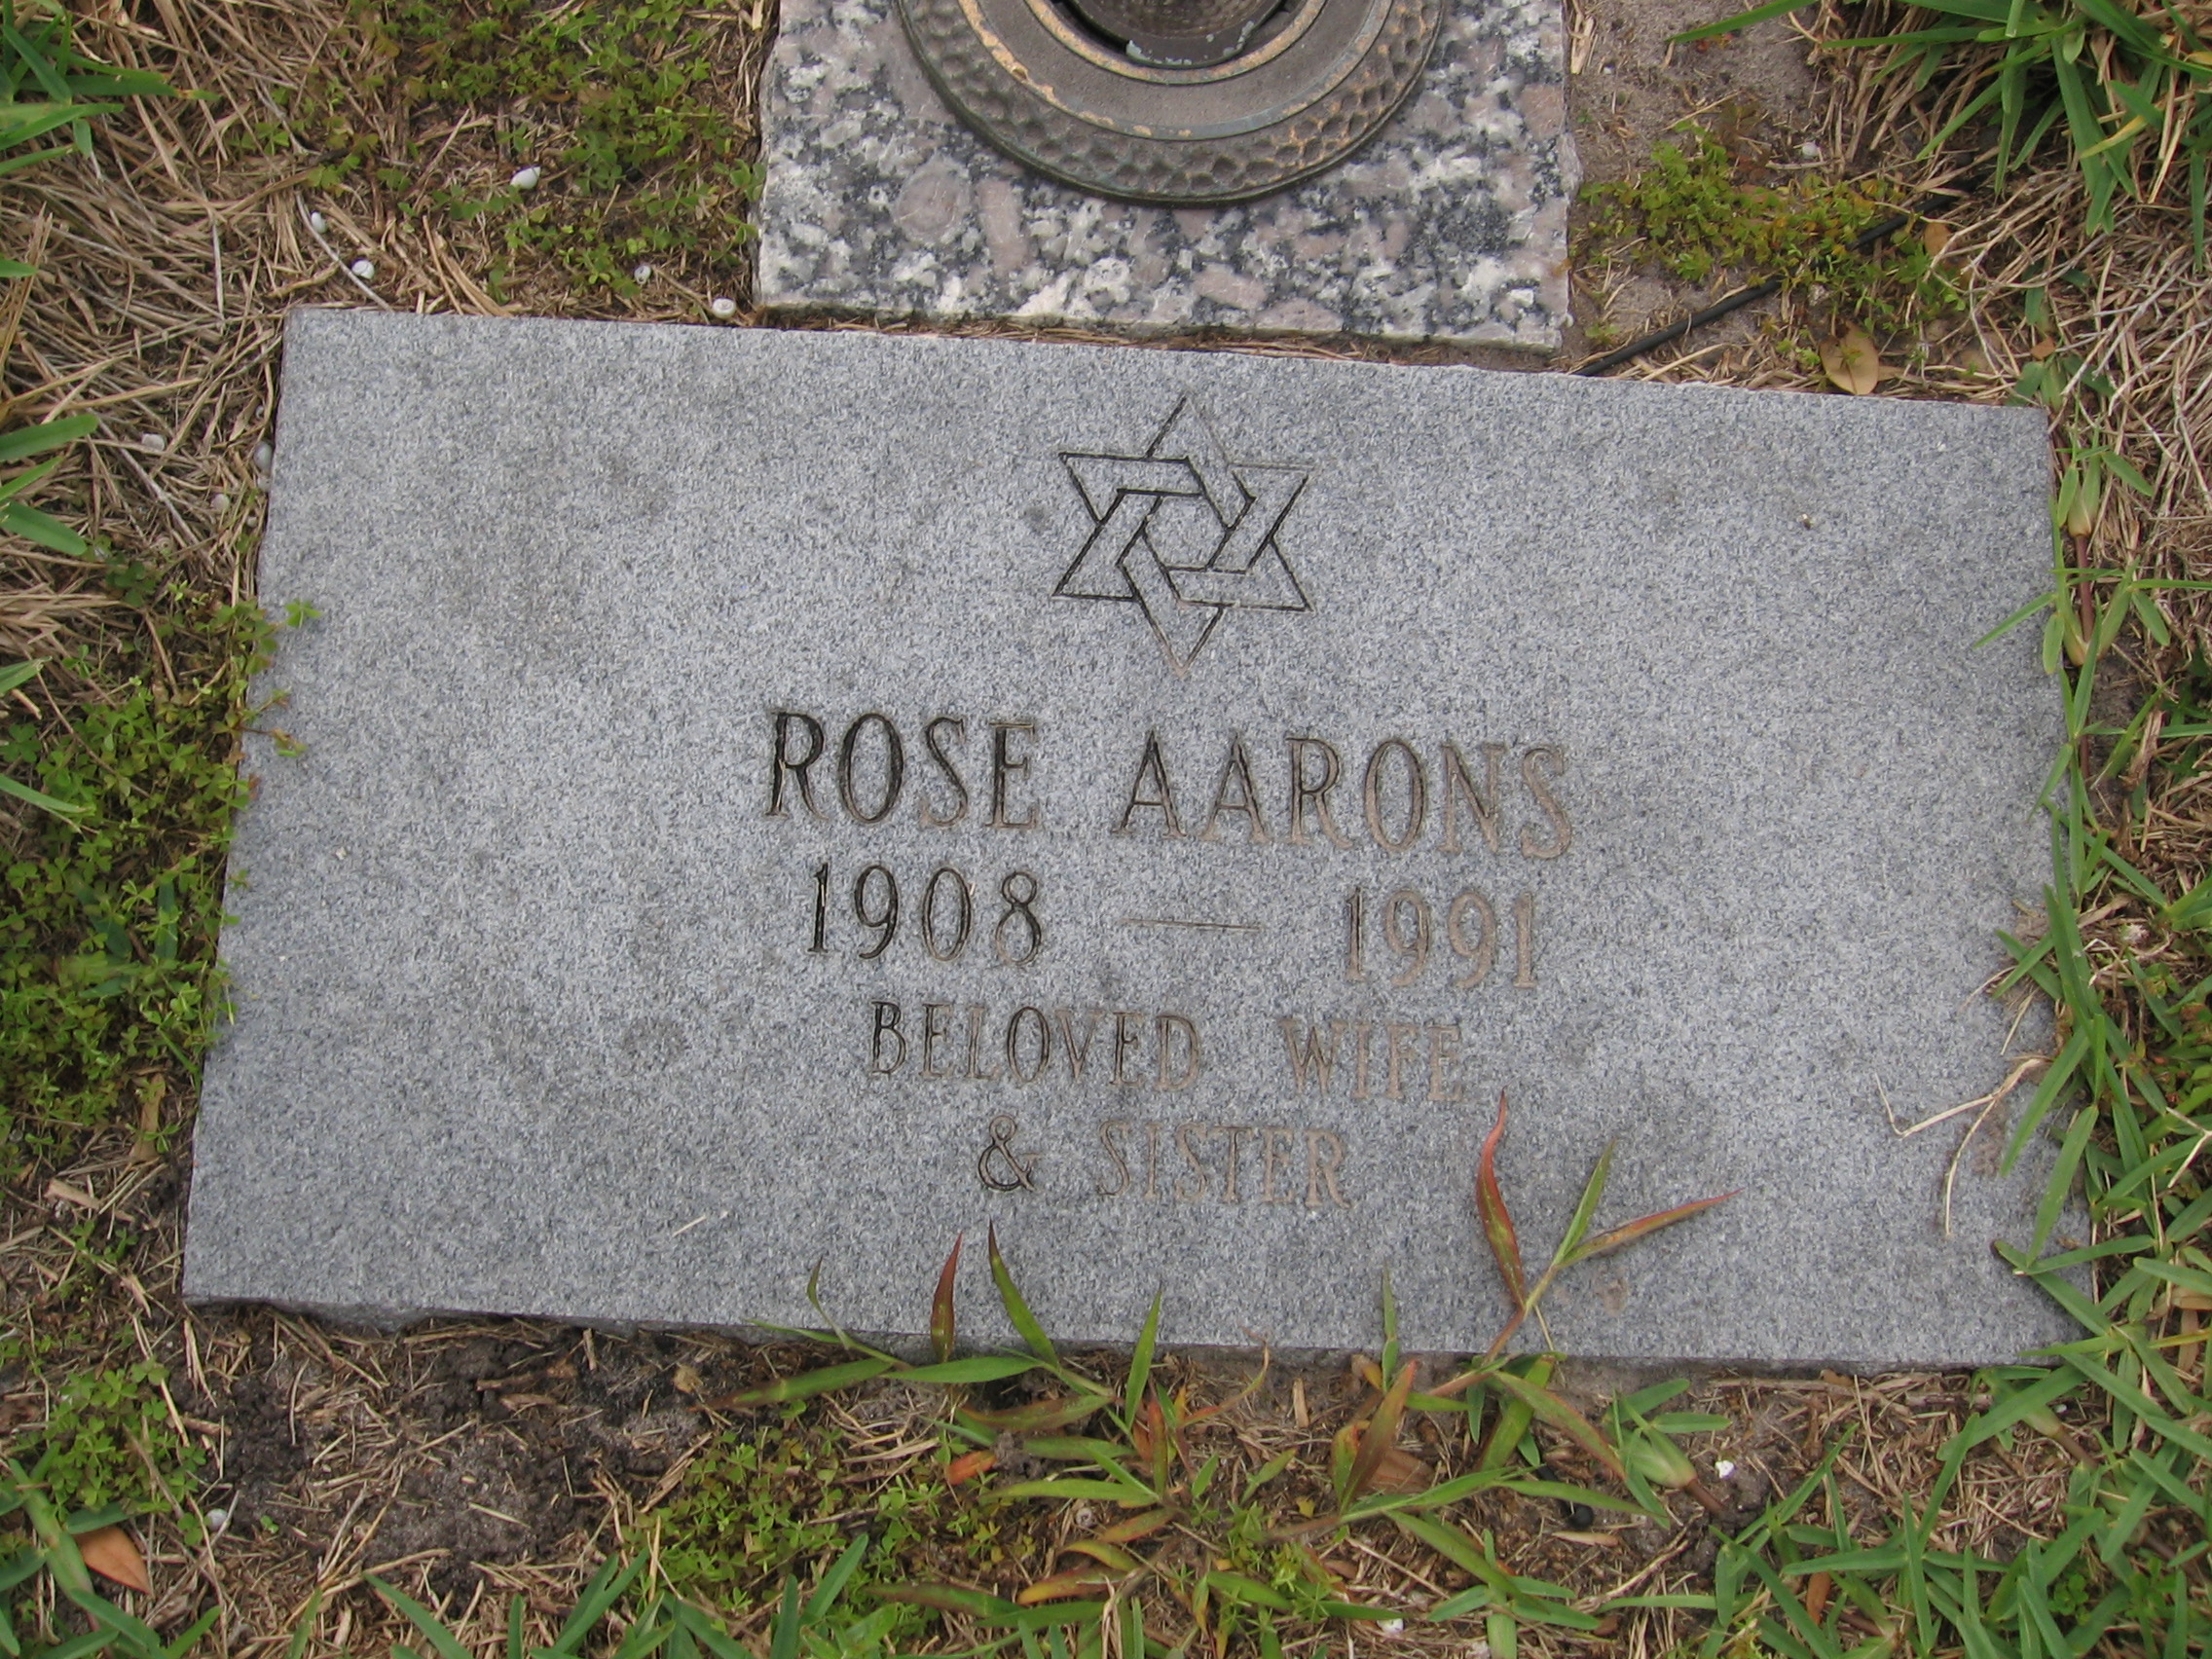 Rose Aarons